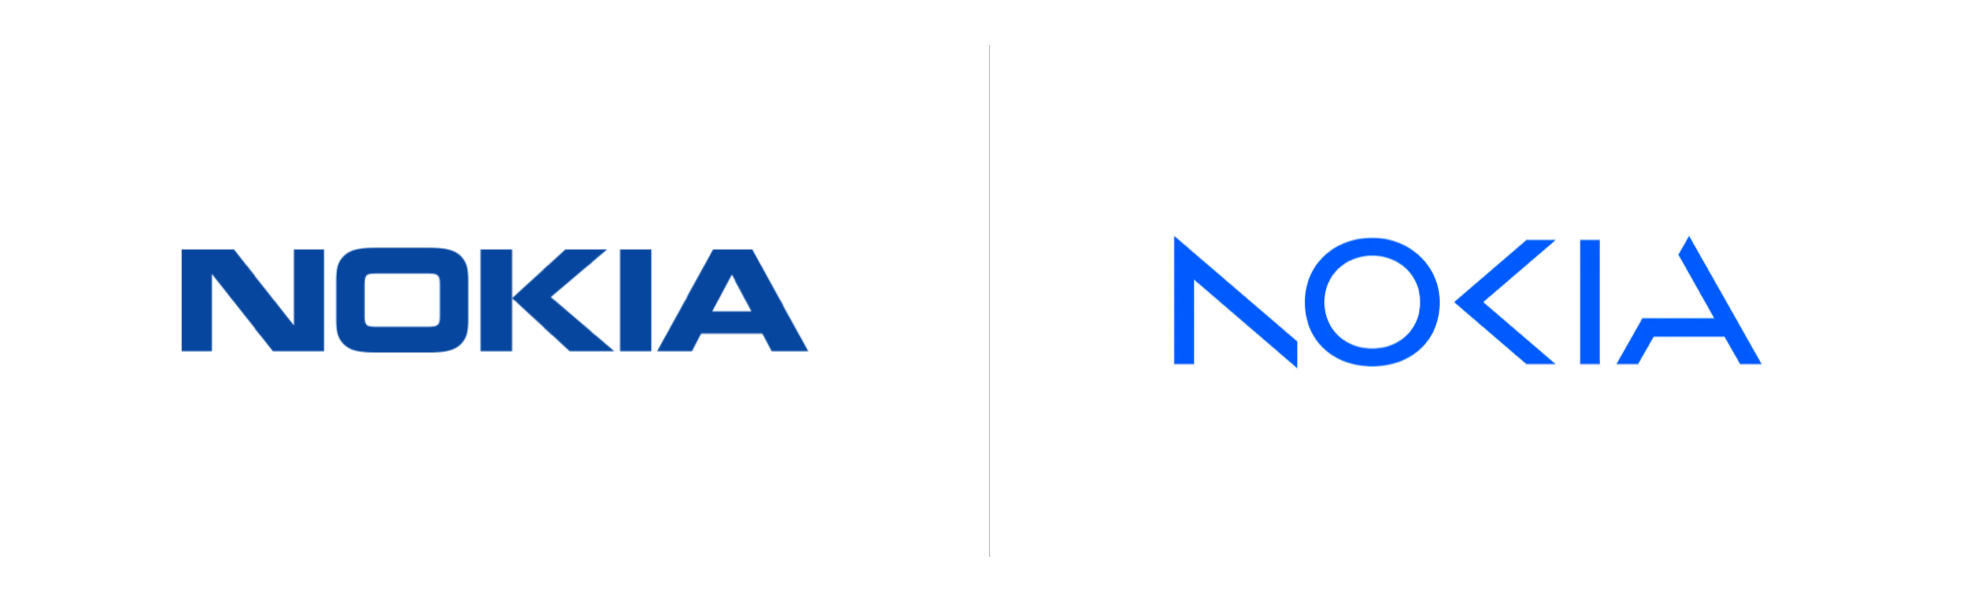 nokia stare i nowe logo